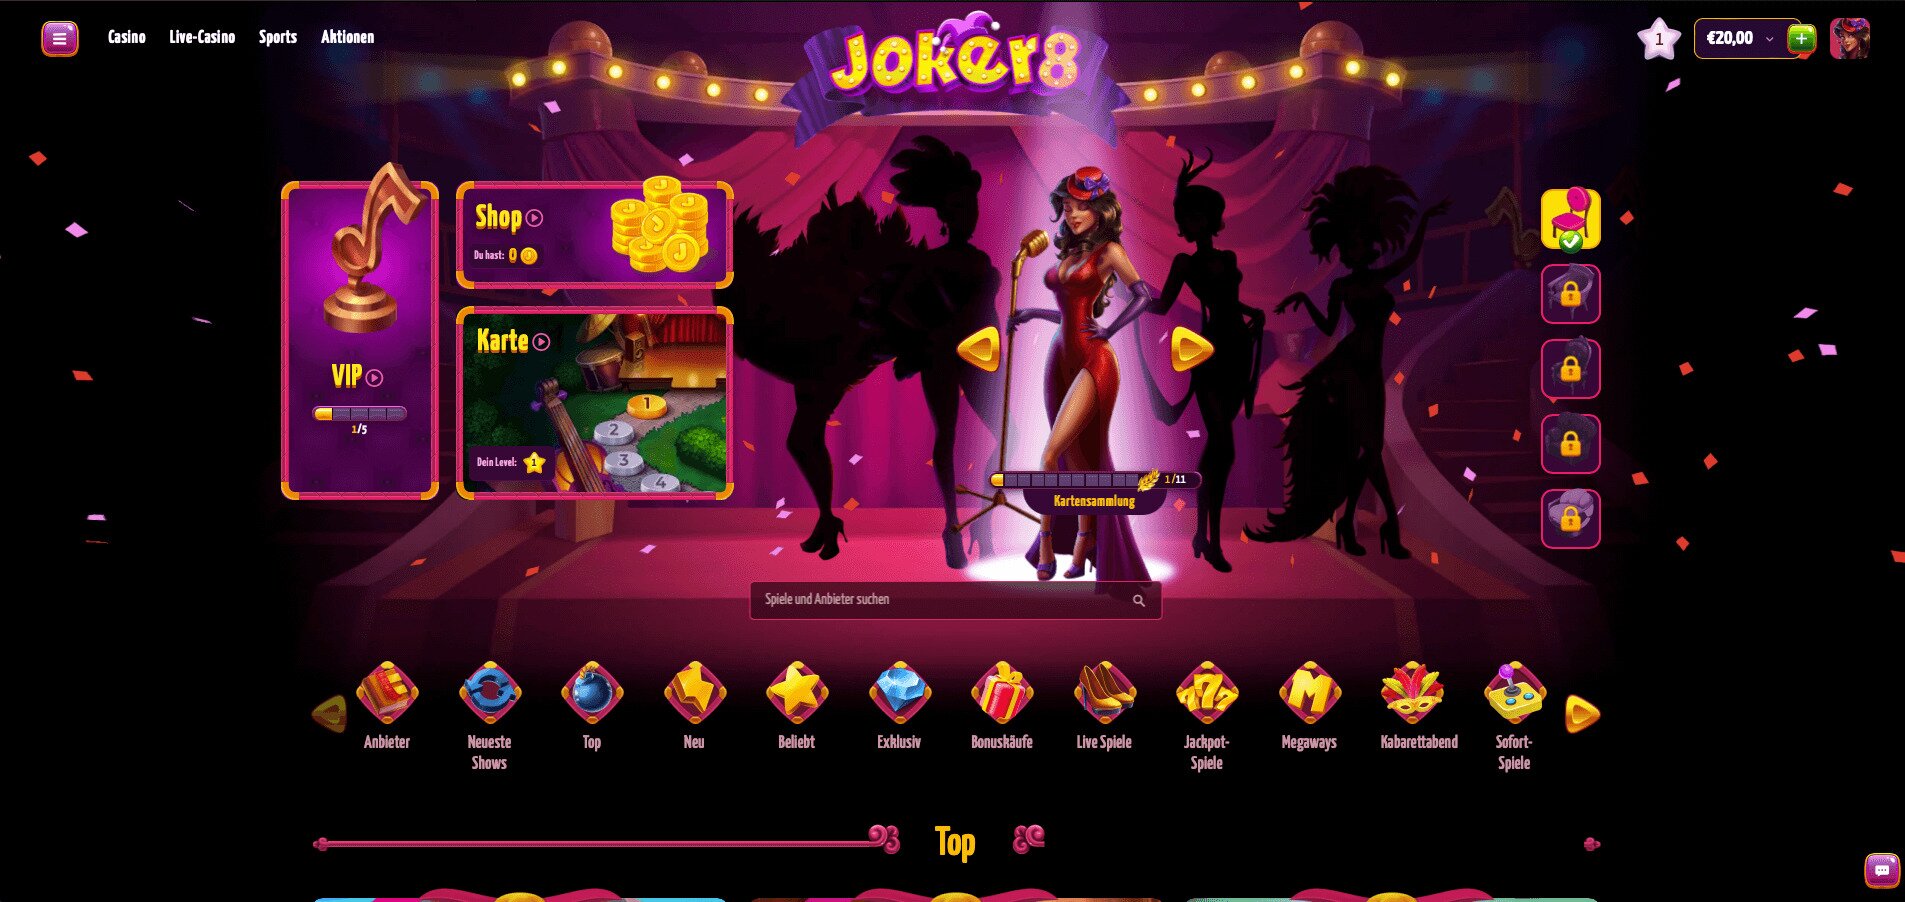 joker8 homepage